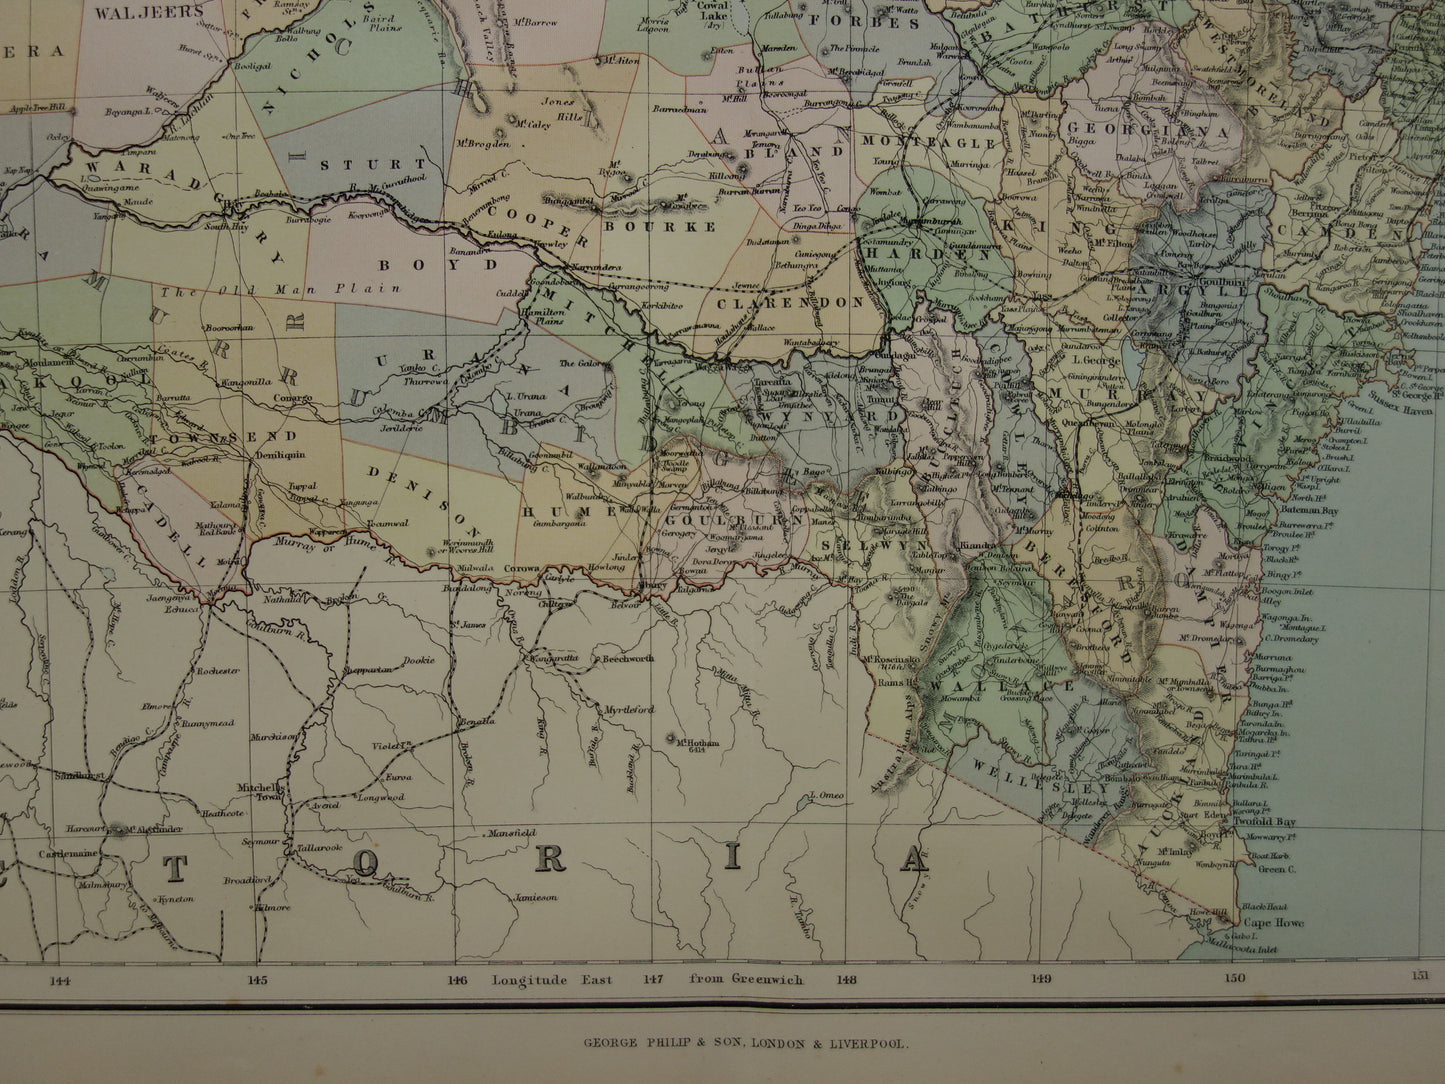 New South Wales Australië oude kaart 1890 originele antieke Engelse landkaart NSW Sydney poster